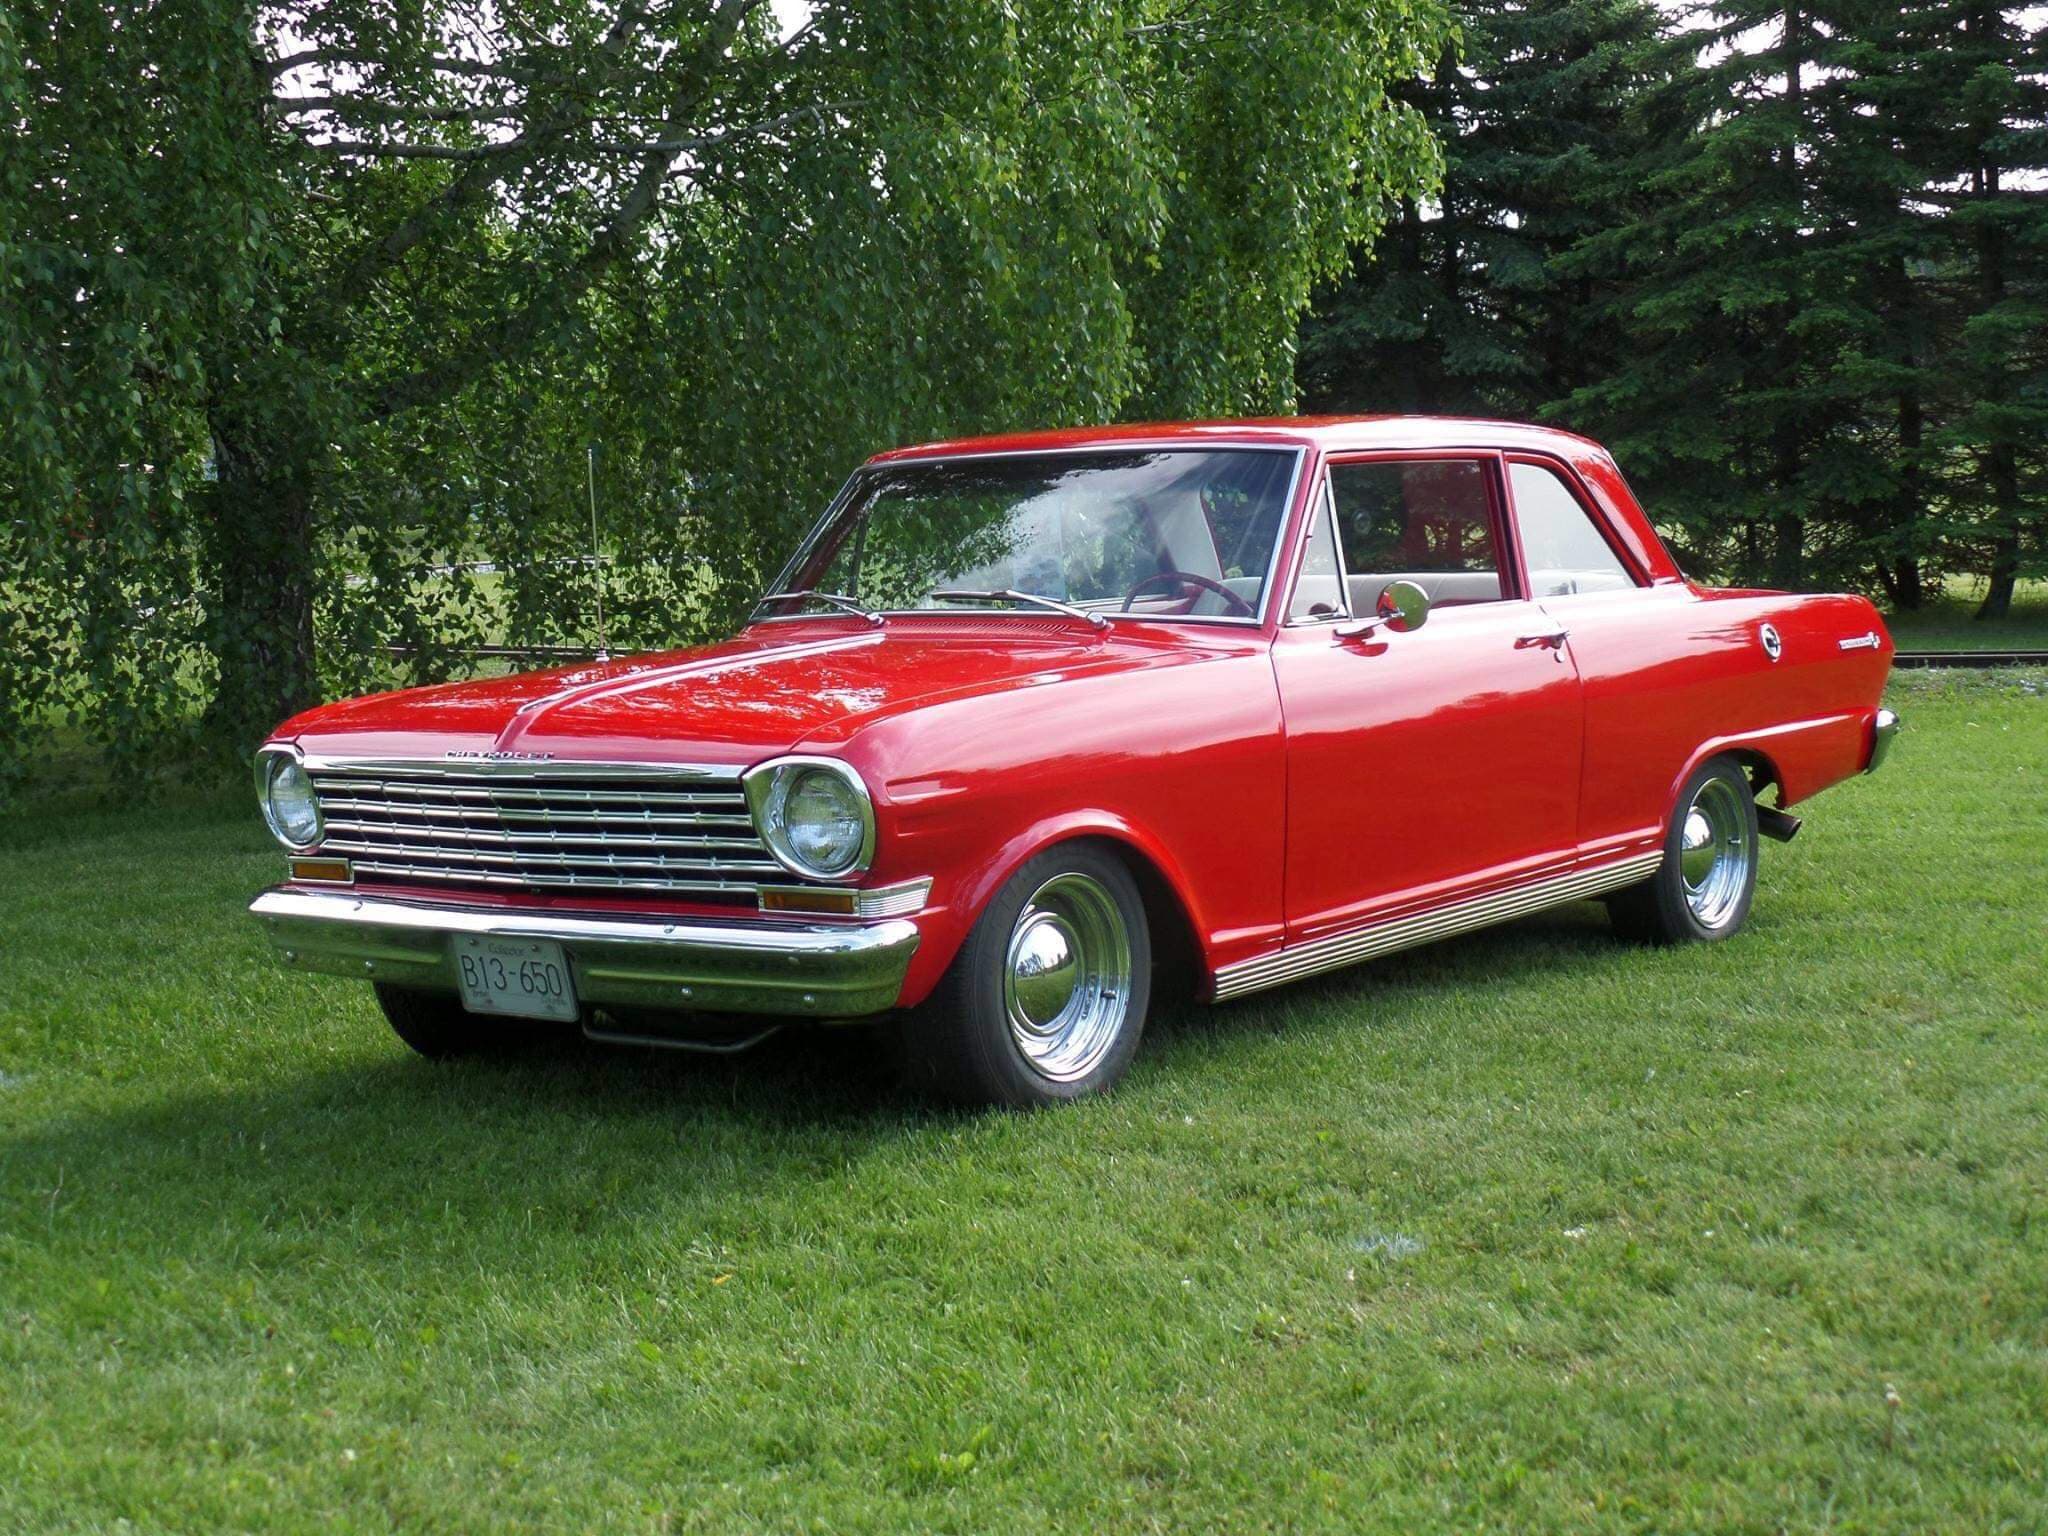 1964 Chevy II Nova, owned by Wayne and Judy Clarke.